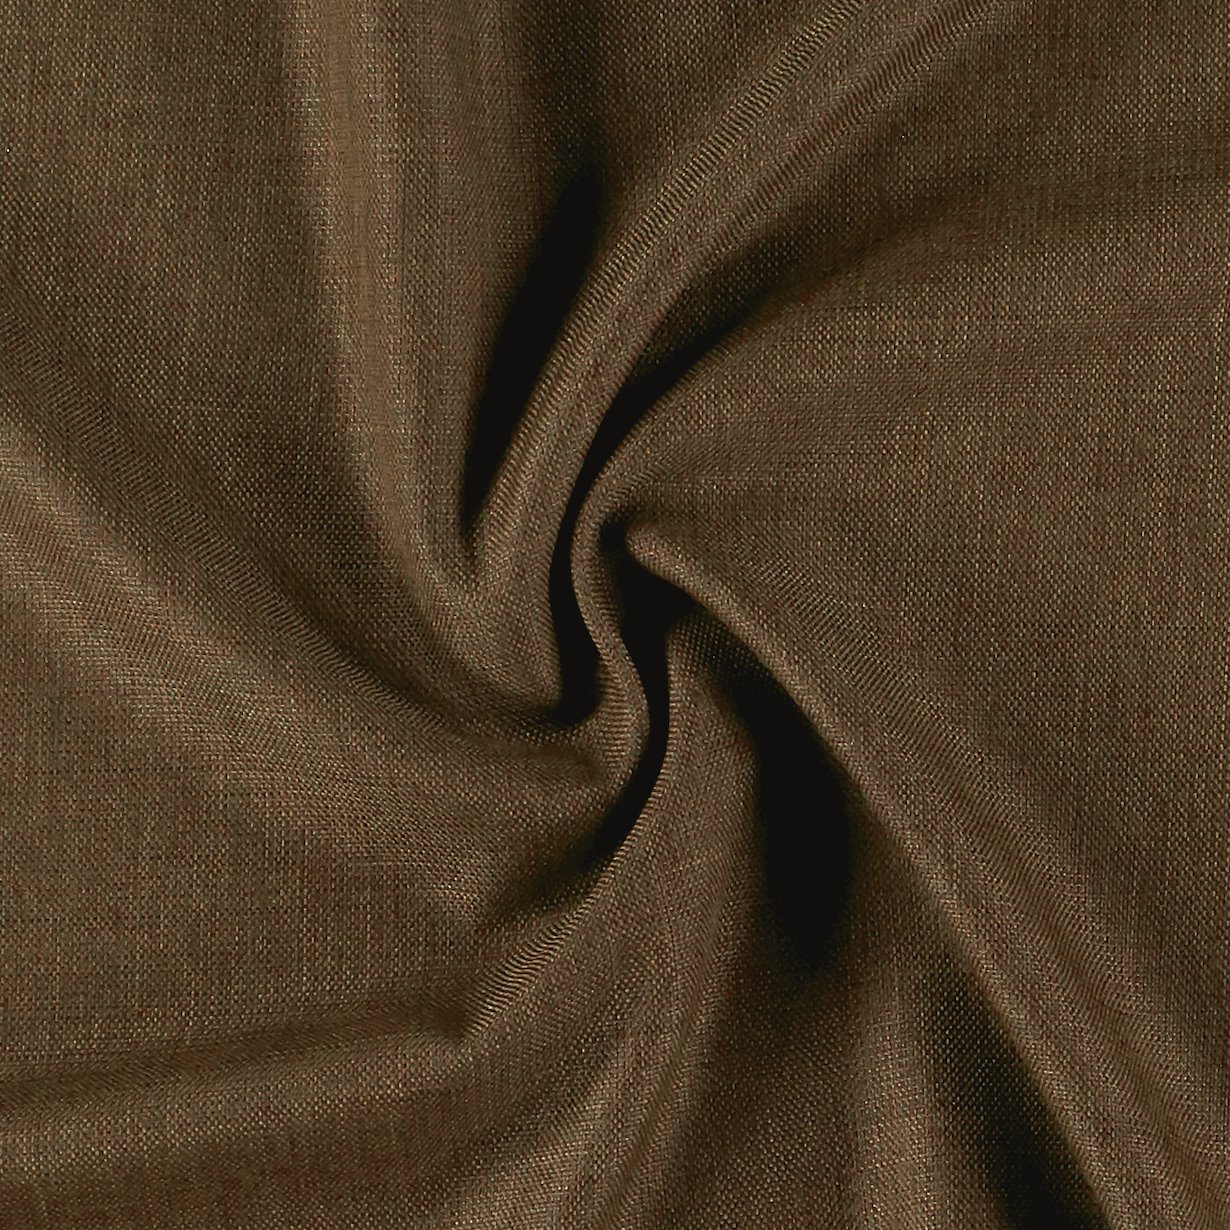 Upholstery fabric dusty violet melange